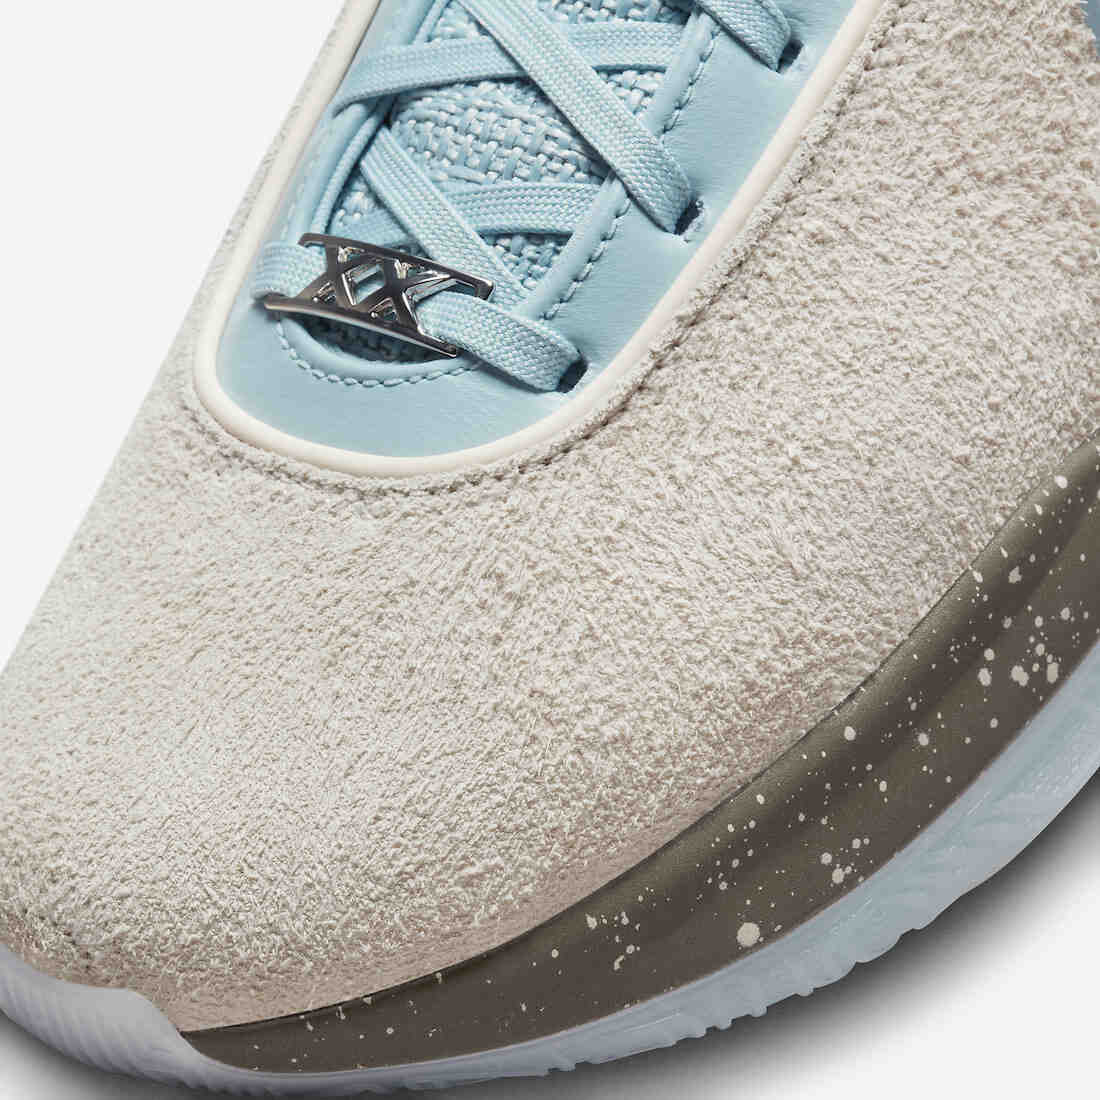 UNKNWN Nike LeBron 20 DV9090-801 Release Date